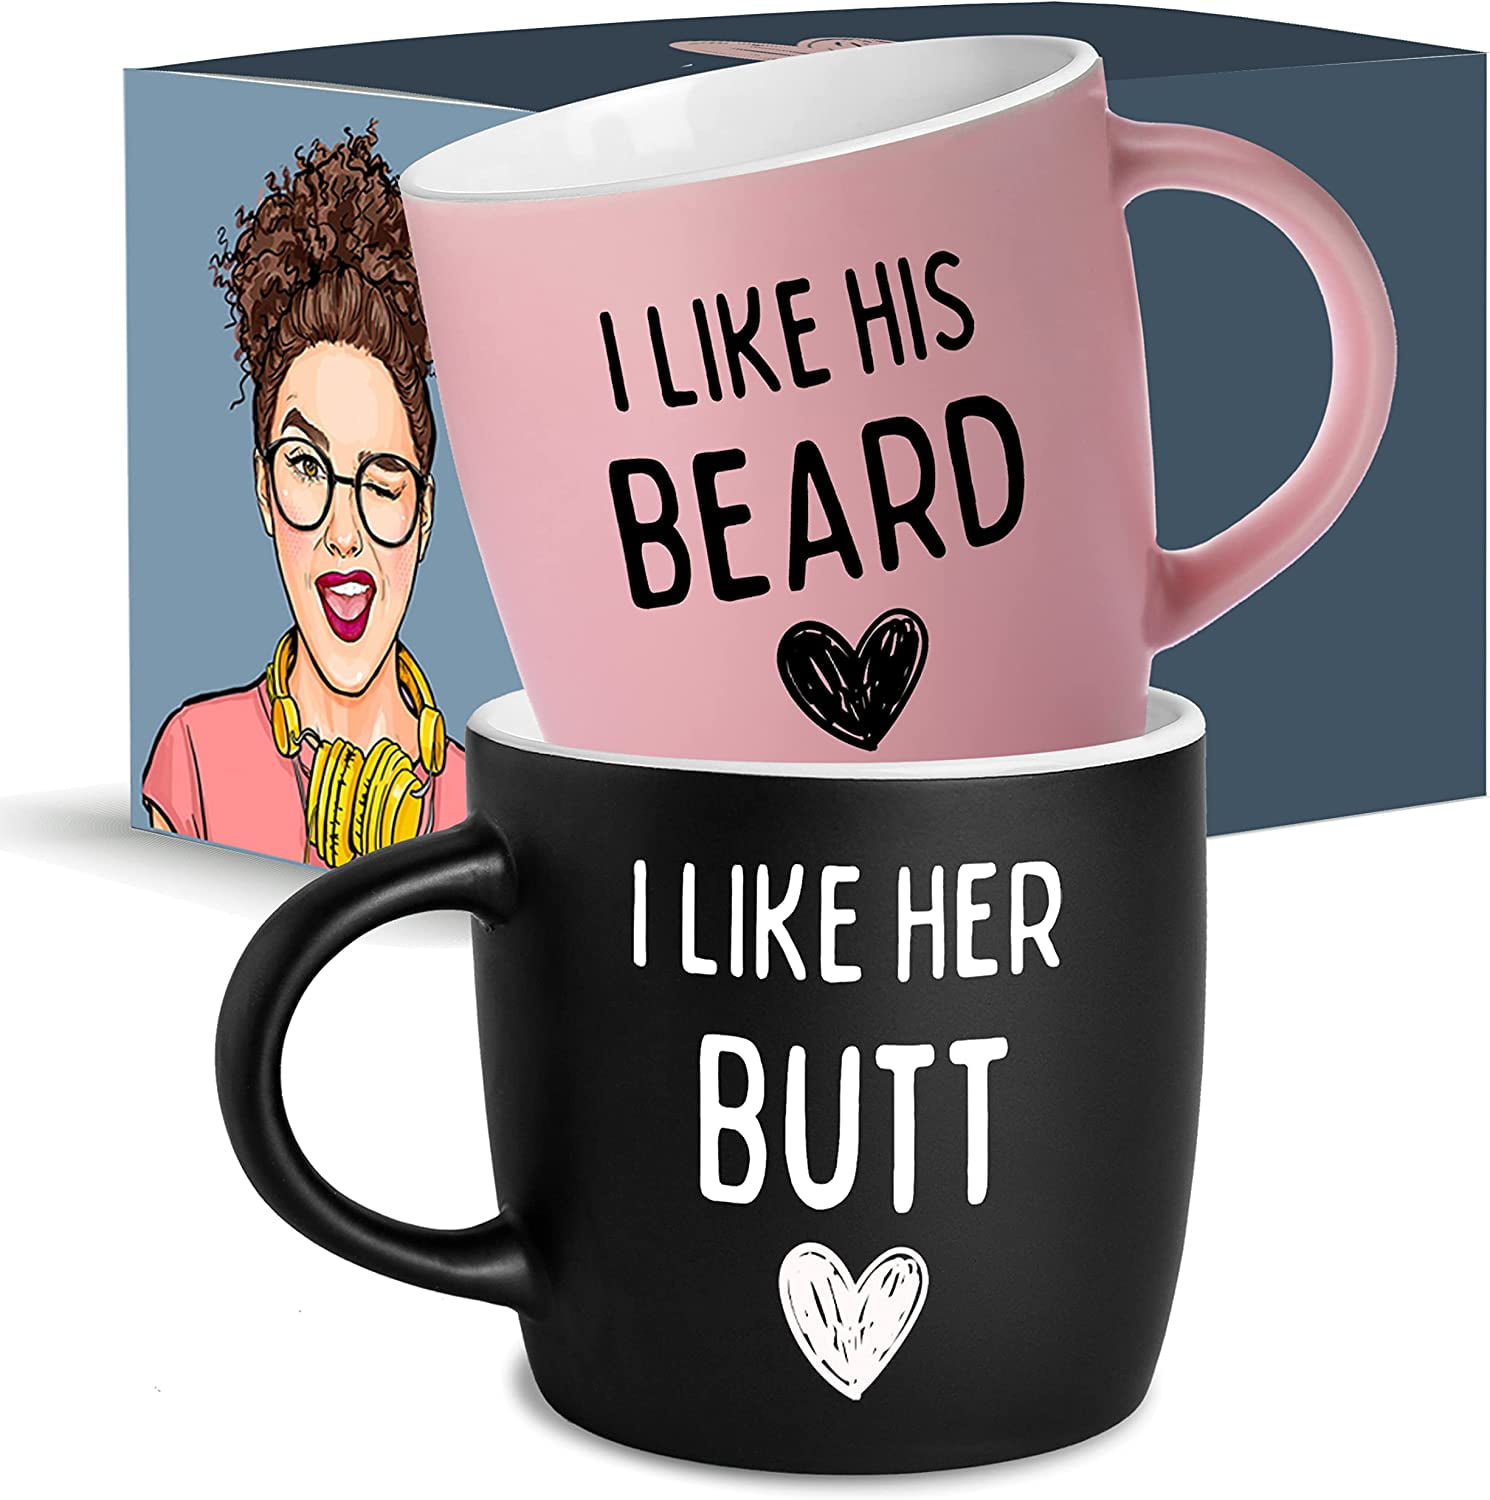 Beard Man Coffee Mug, Men Use Love To Get Sex Women Use Sex To Get Love I  Have A Beard To Get Both-Travel Coffee Mug 14 oz 